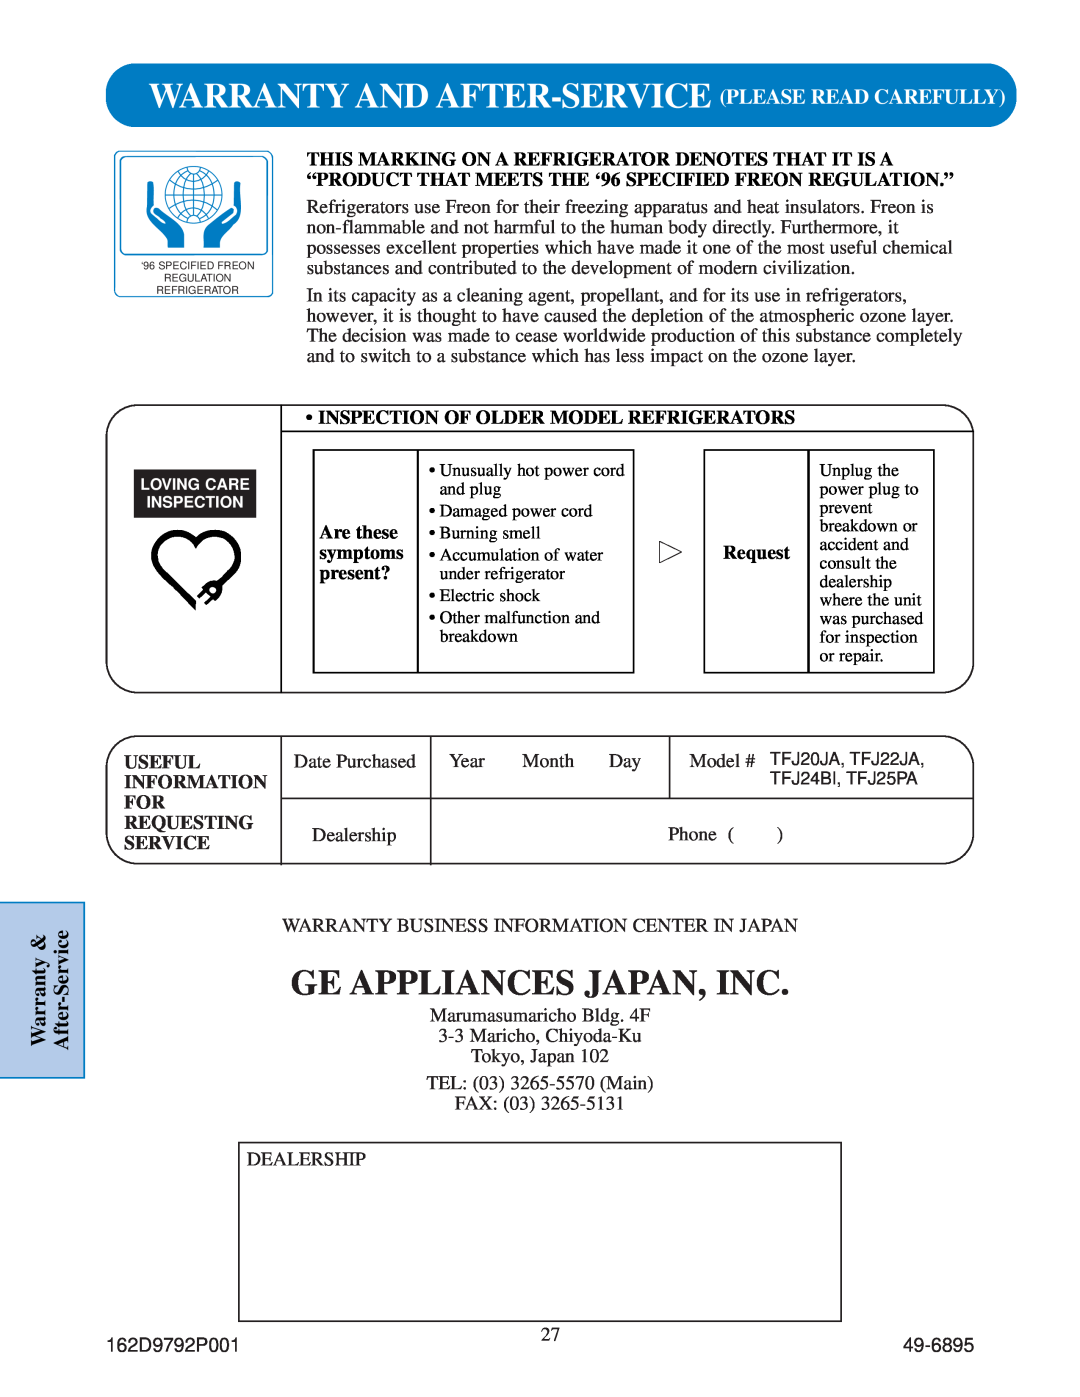 GE TPJ24BI, TFJ25PA Ge Appliances Japan, Inc, Warranty And After-Service Please Read Carefully, Warranty & After-Service 